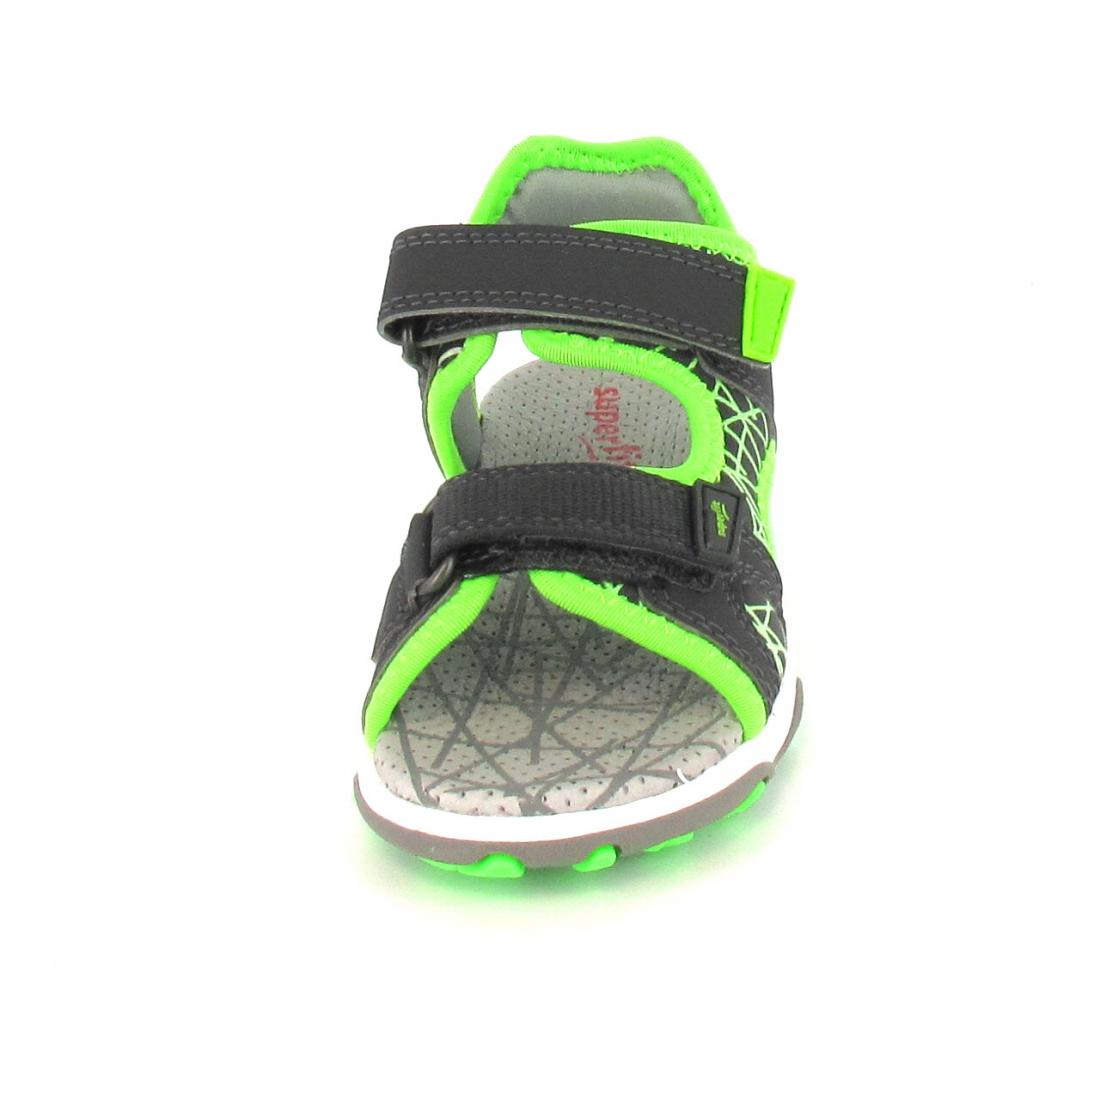 Superfit Sandalette Mike 3.0 | Schuh-Welt - Wo Markenschuhe günstig sind | Riemchensandalen